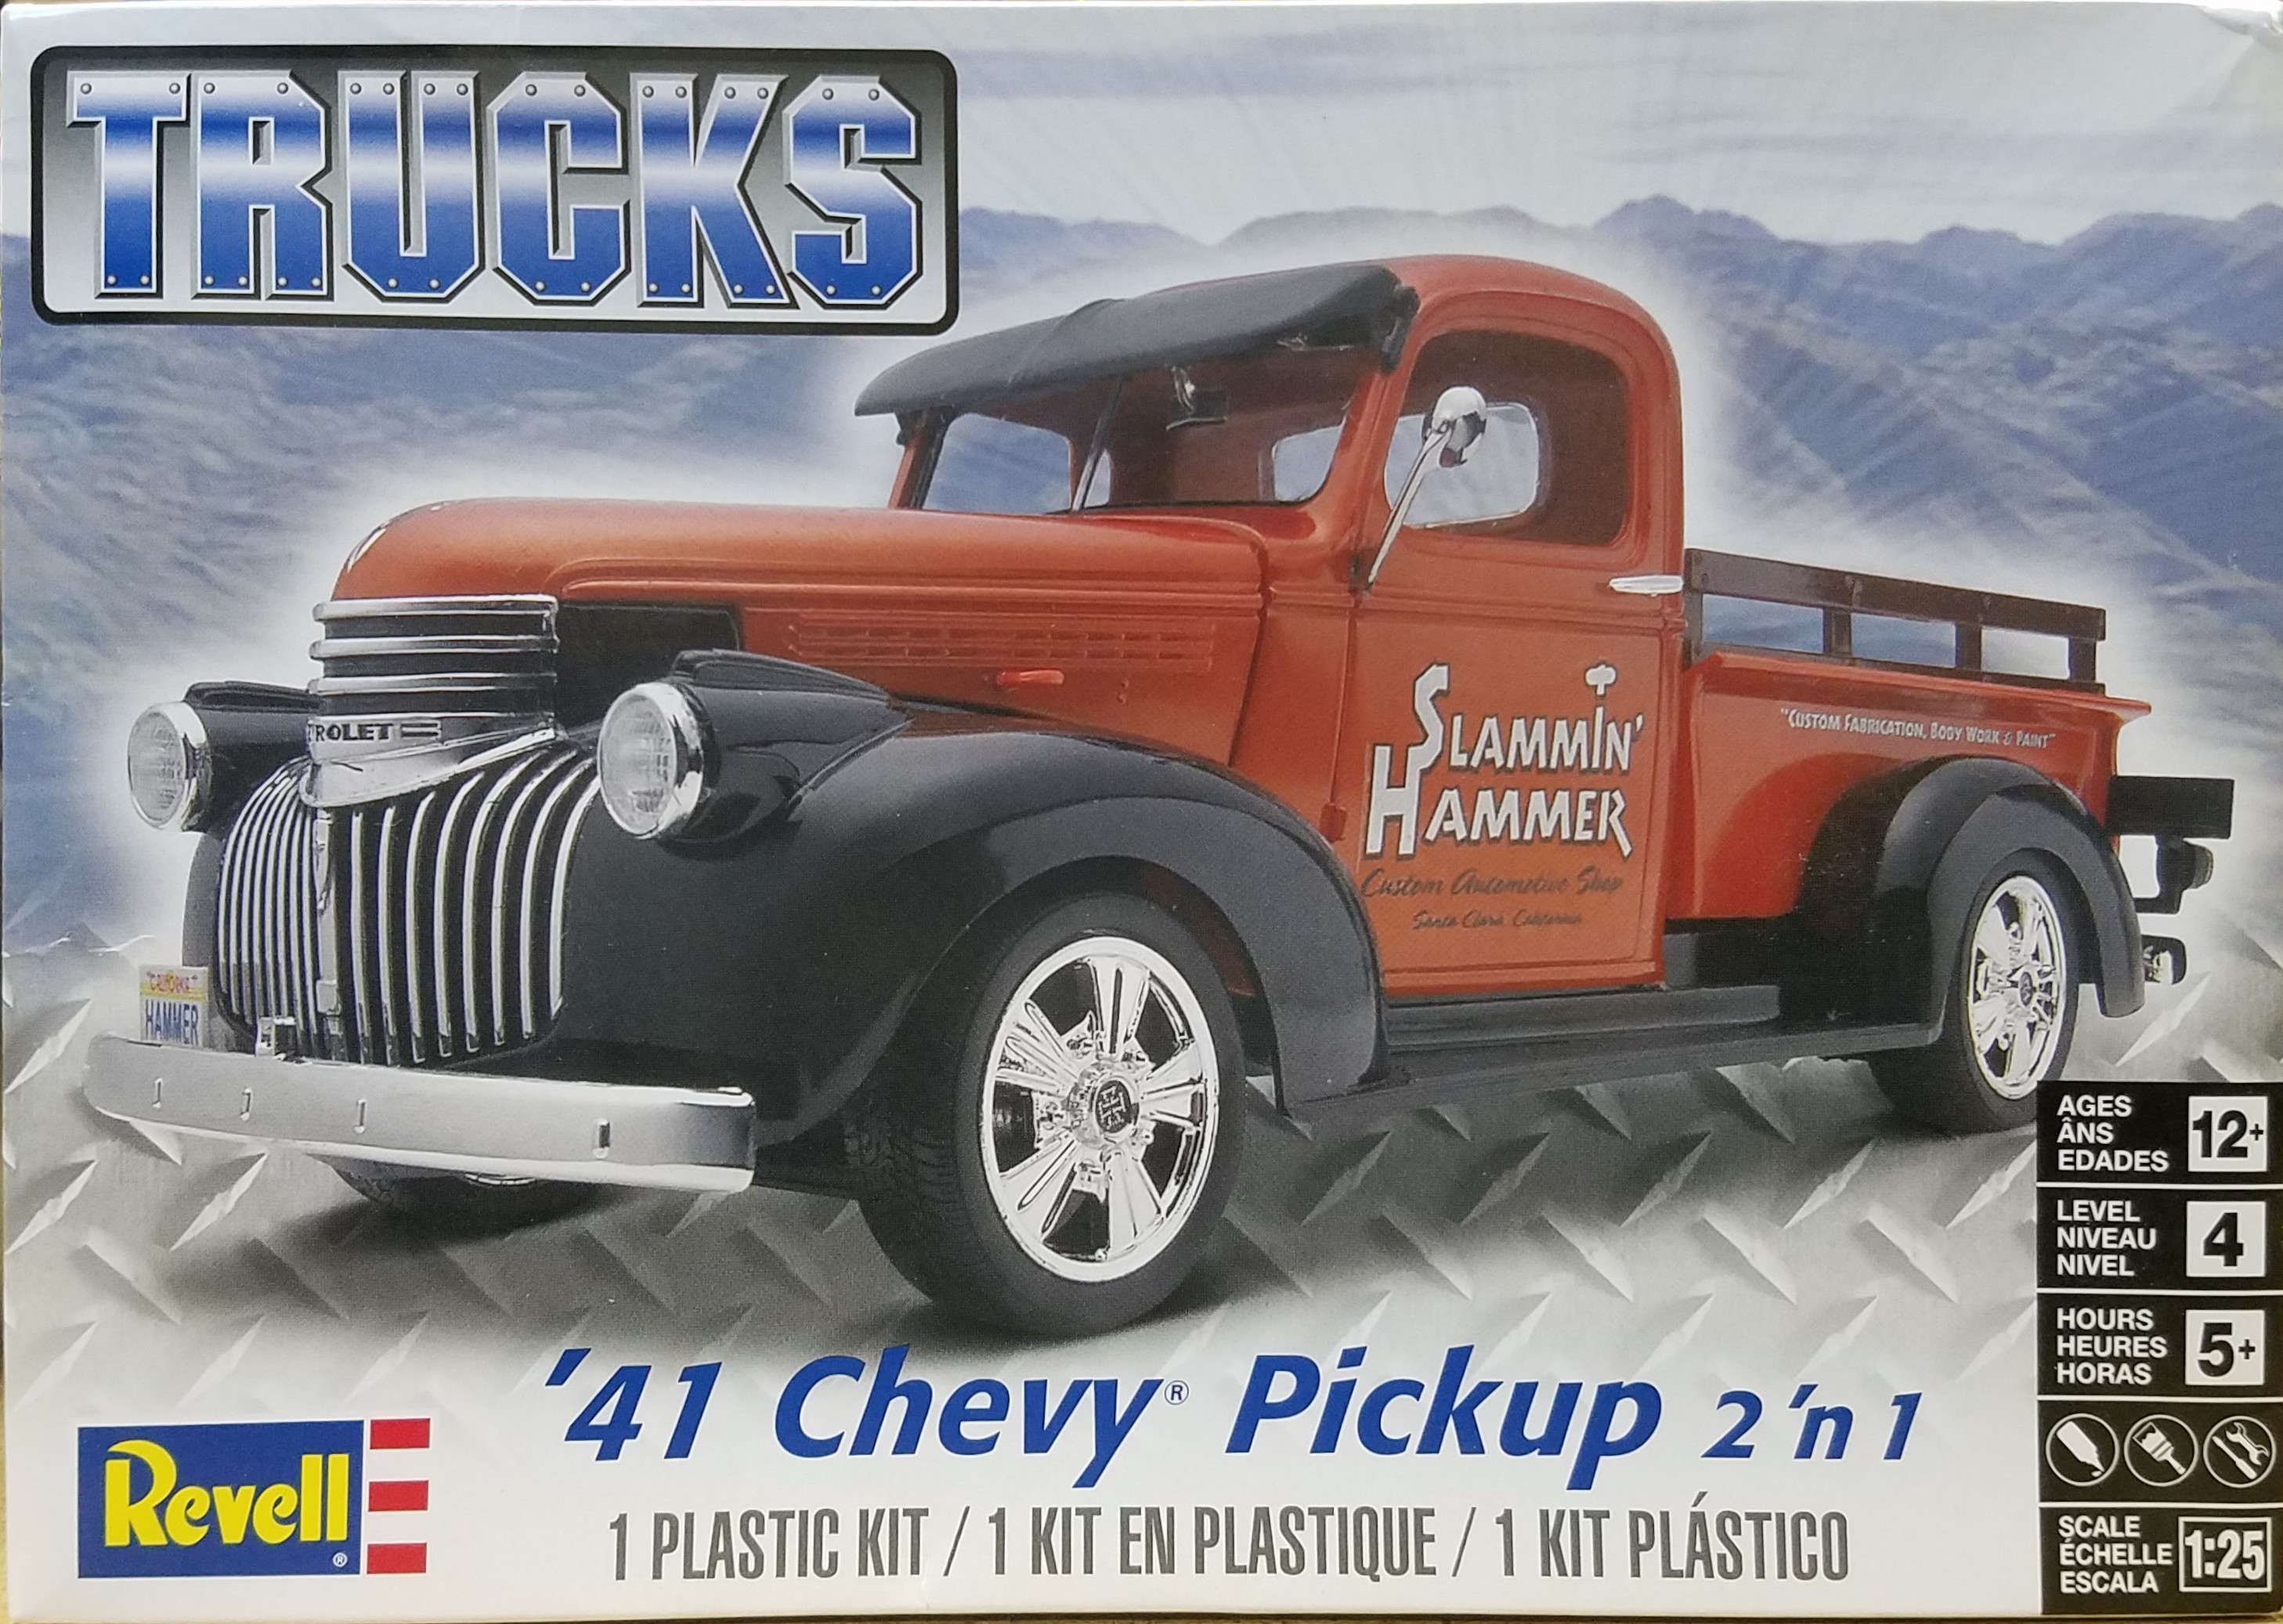 1941 Chevy Pickup 2-n-1 Box art